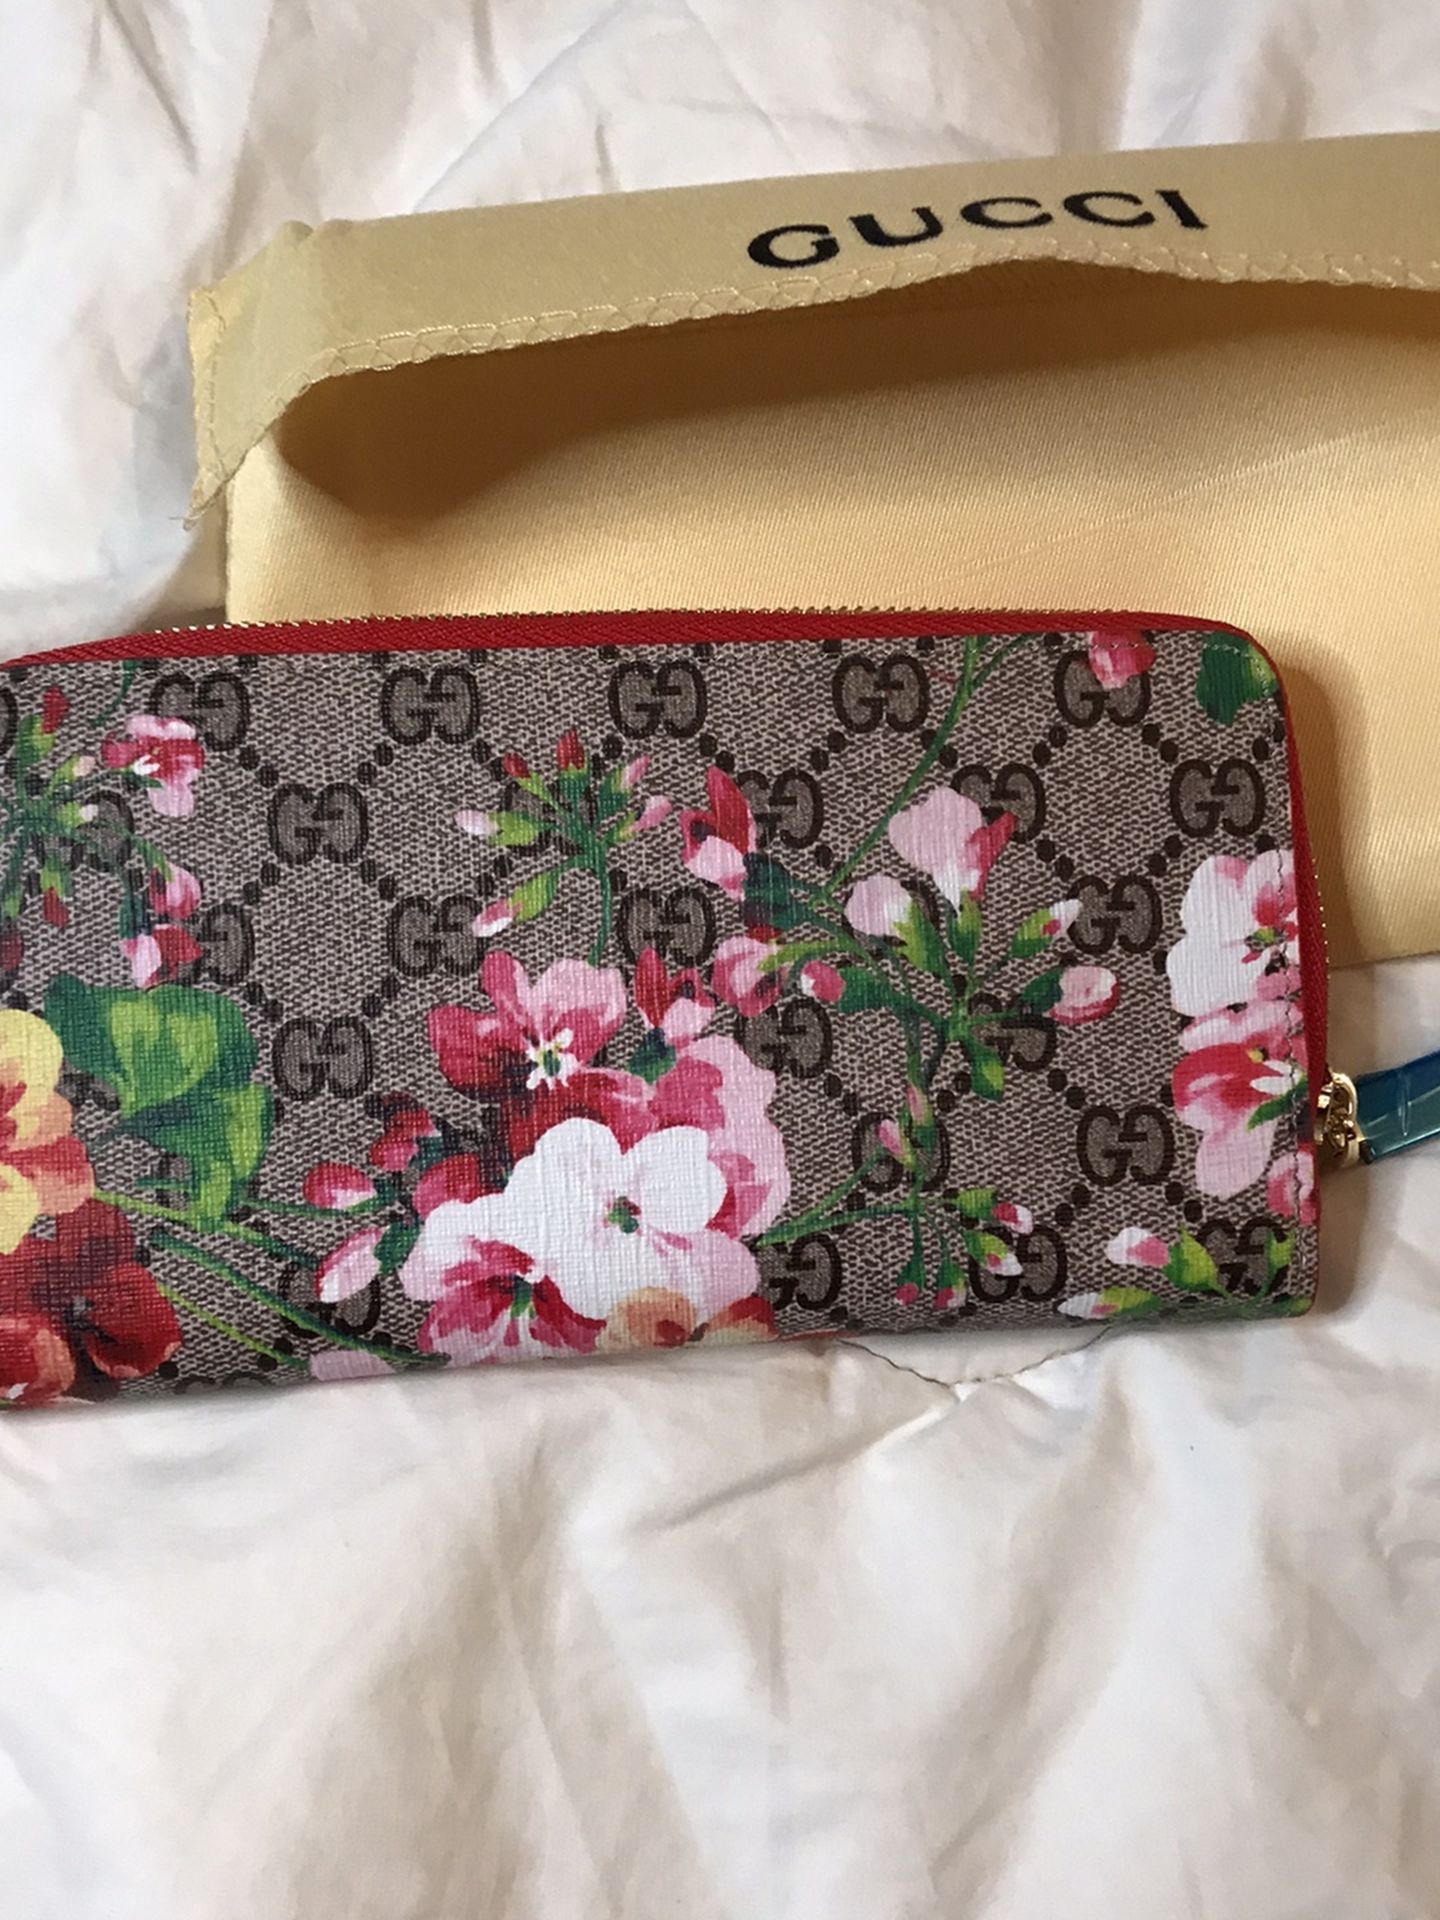 Flowered wallet